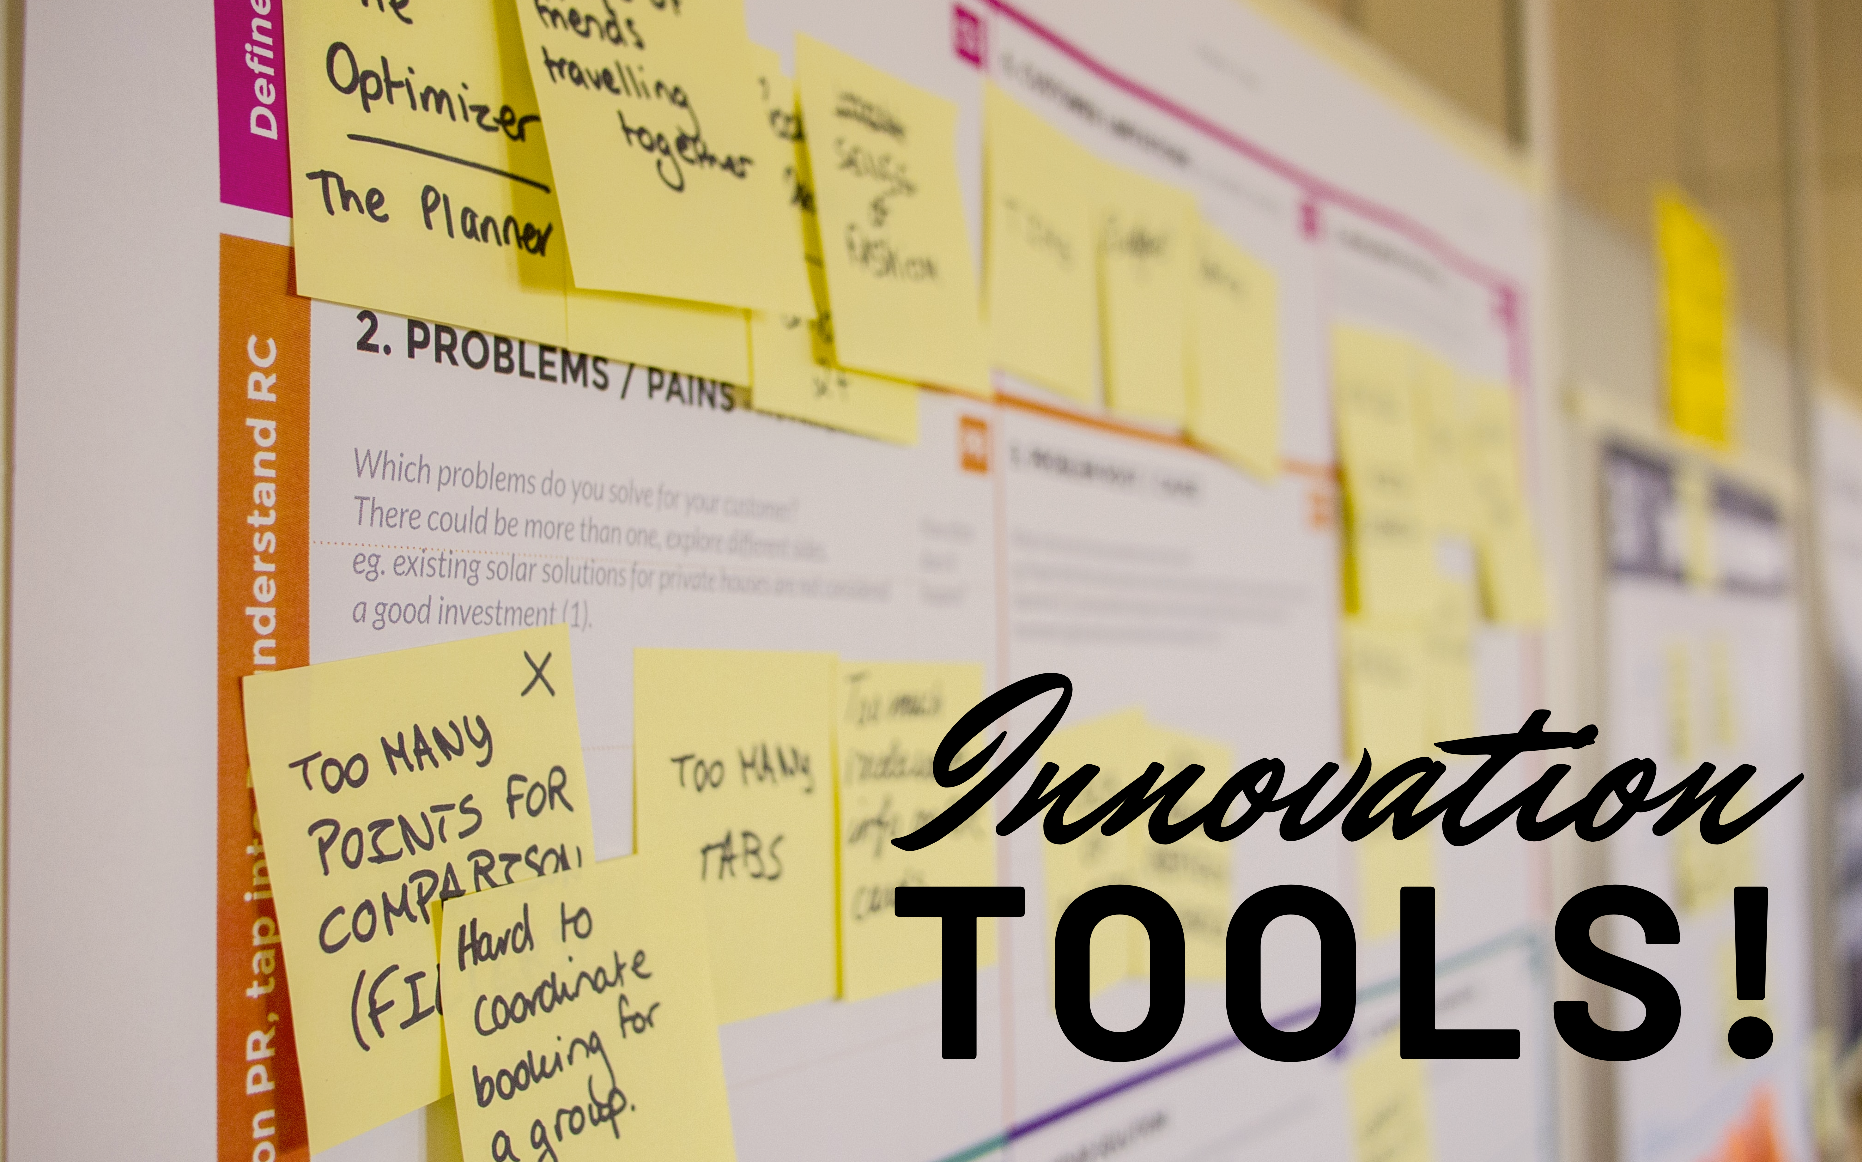 Innovative hand tools, New innovation tools, Innovation tools, Innovation management tools, Tools for innovation management, Innovation tools and techniques